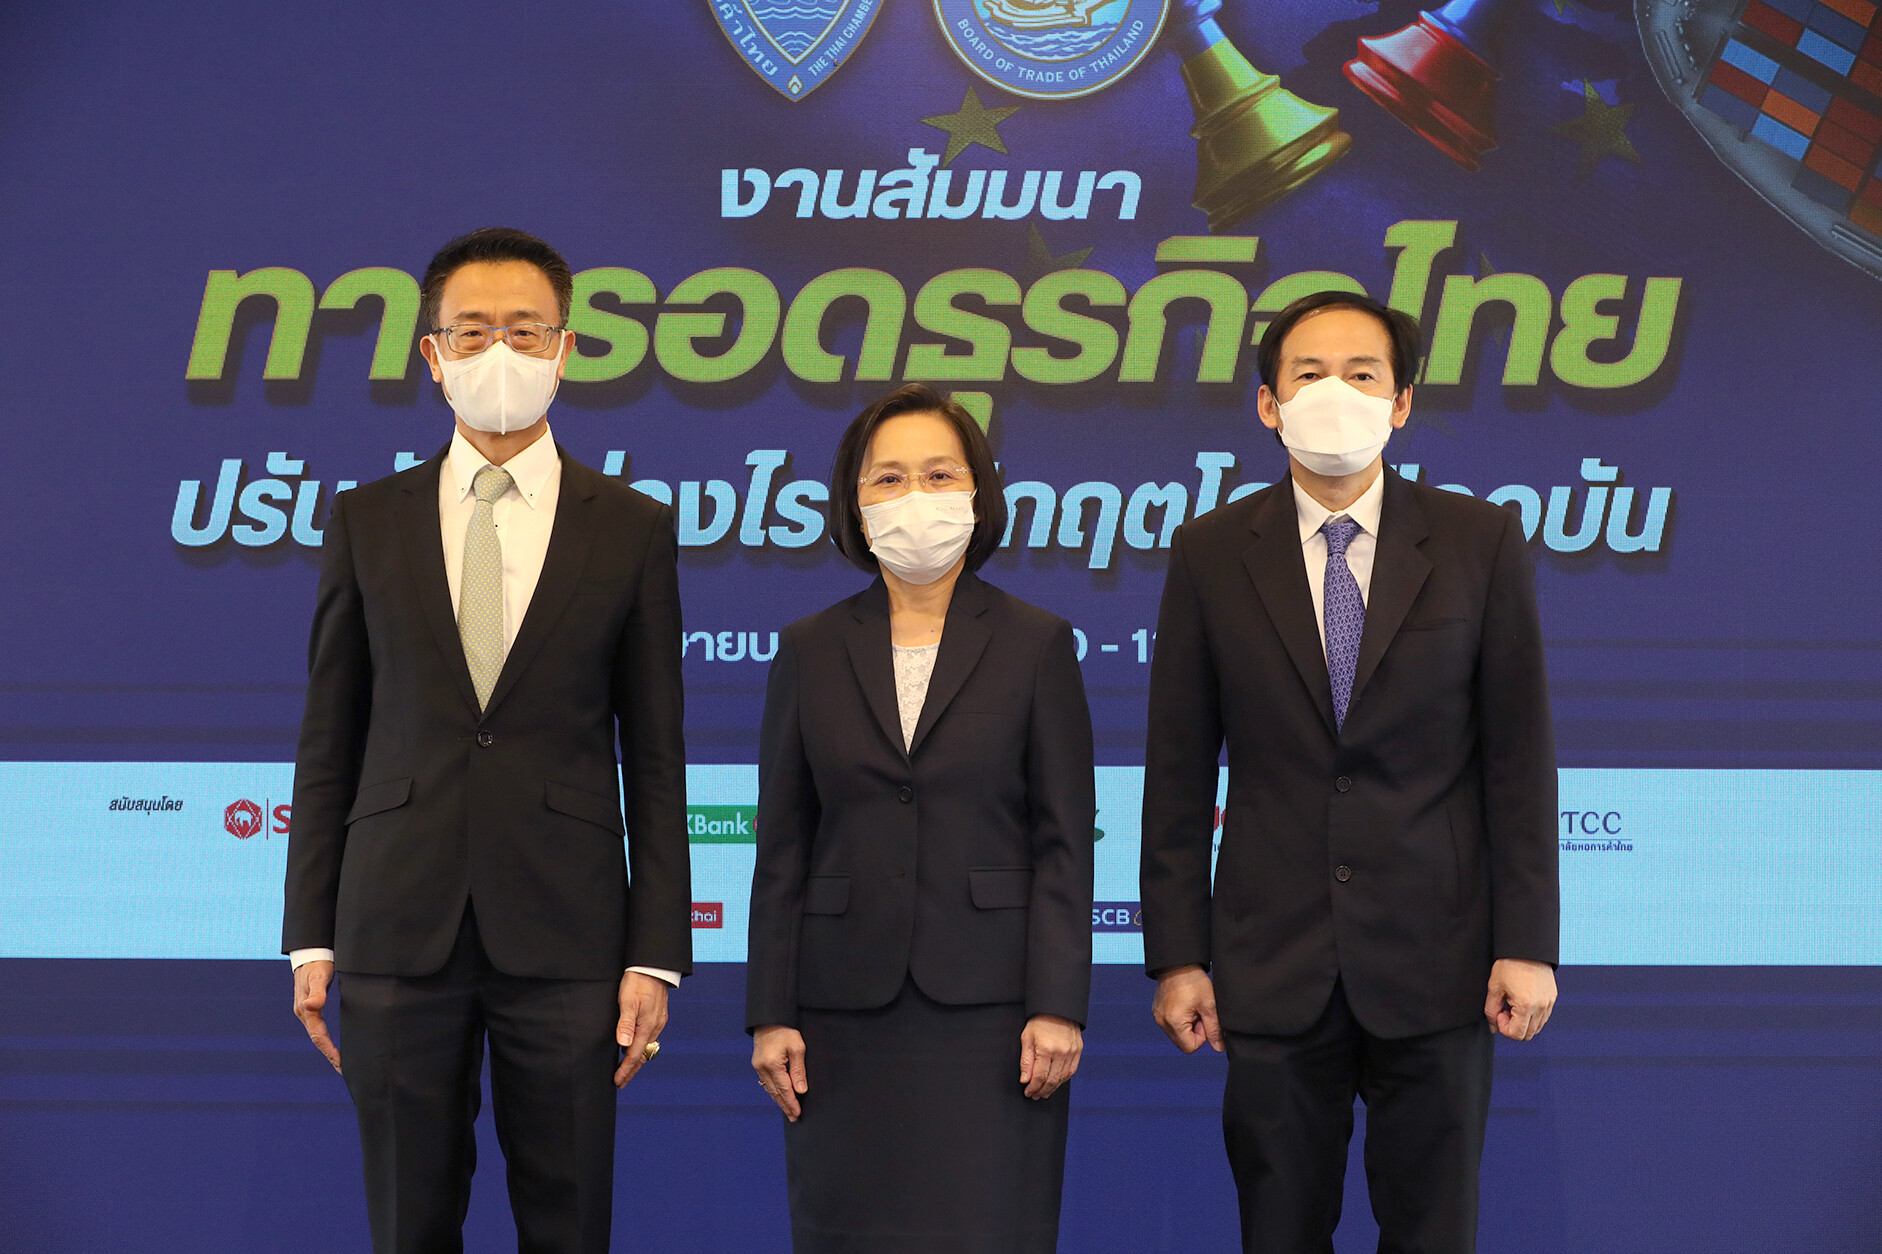 EXIM BANK ร่วมเป็นวิทยากรงานสัมมนา "ทางรอดธุรกิจไทย ปรับตัวอย่างไรในวิกฤตโลกปัจจุบัน"